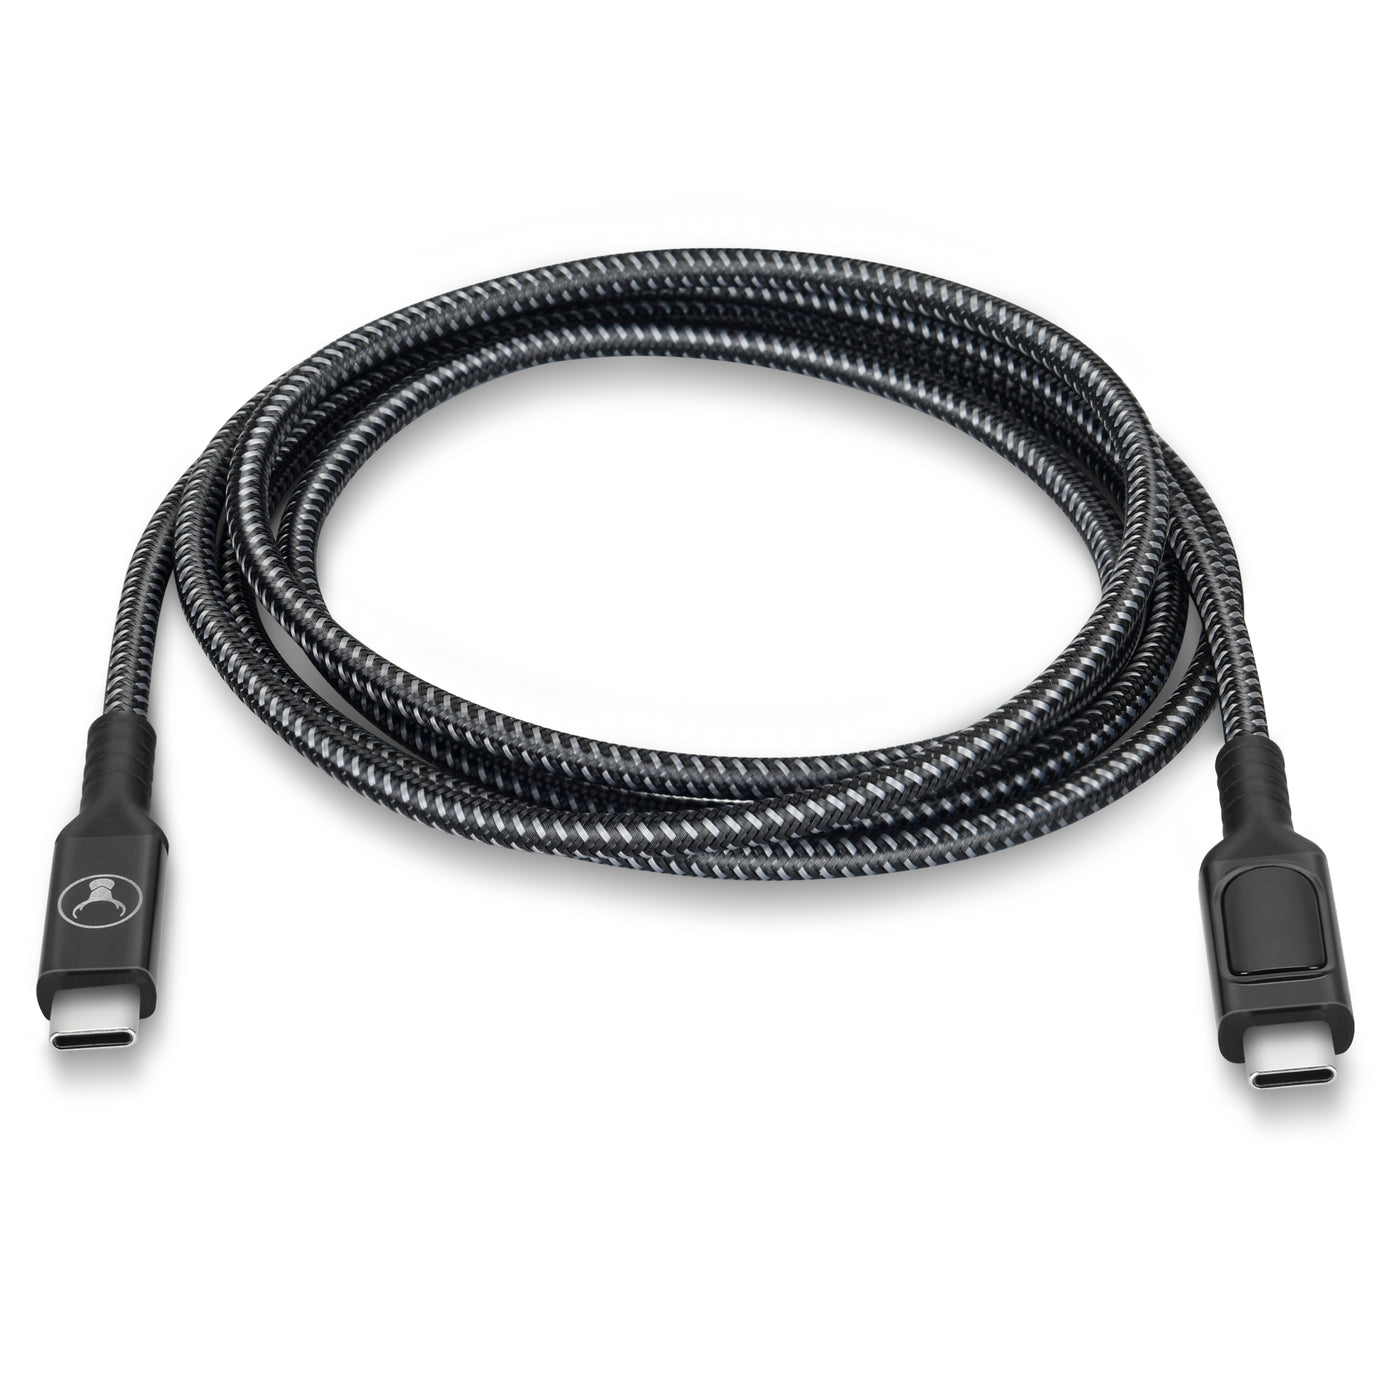 Bonelk Long-Life USB-C to USB-C Digital Display Cable 100W, (1.5m) - Black